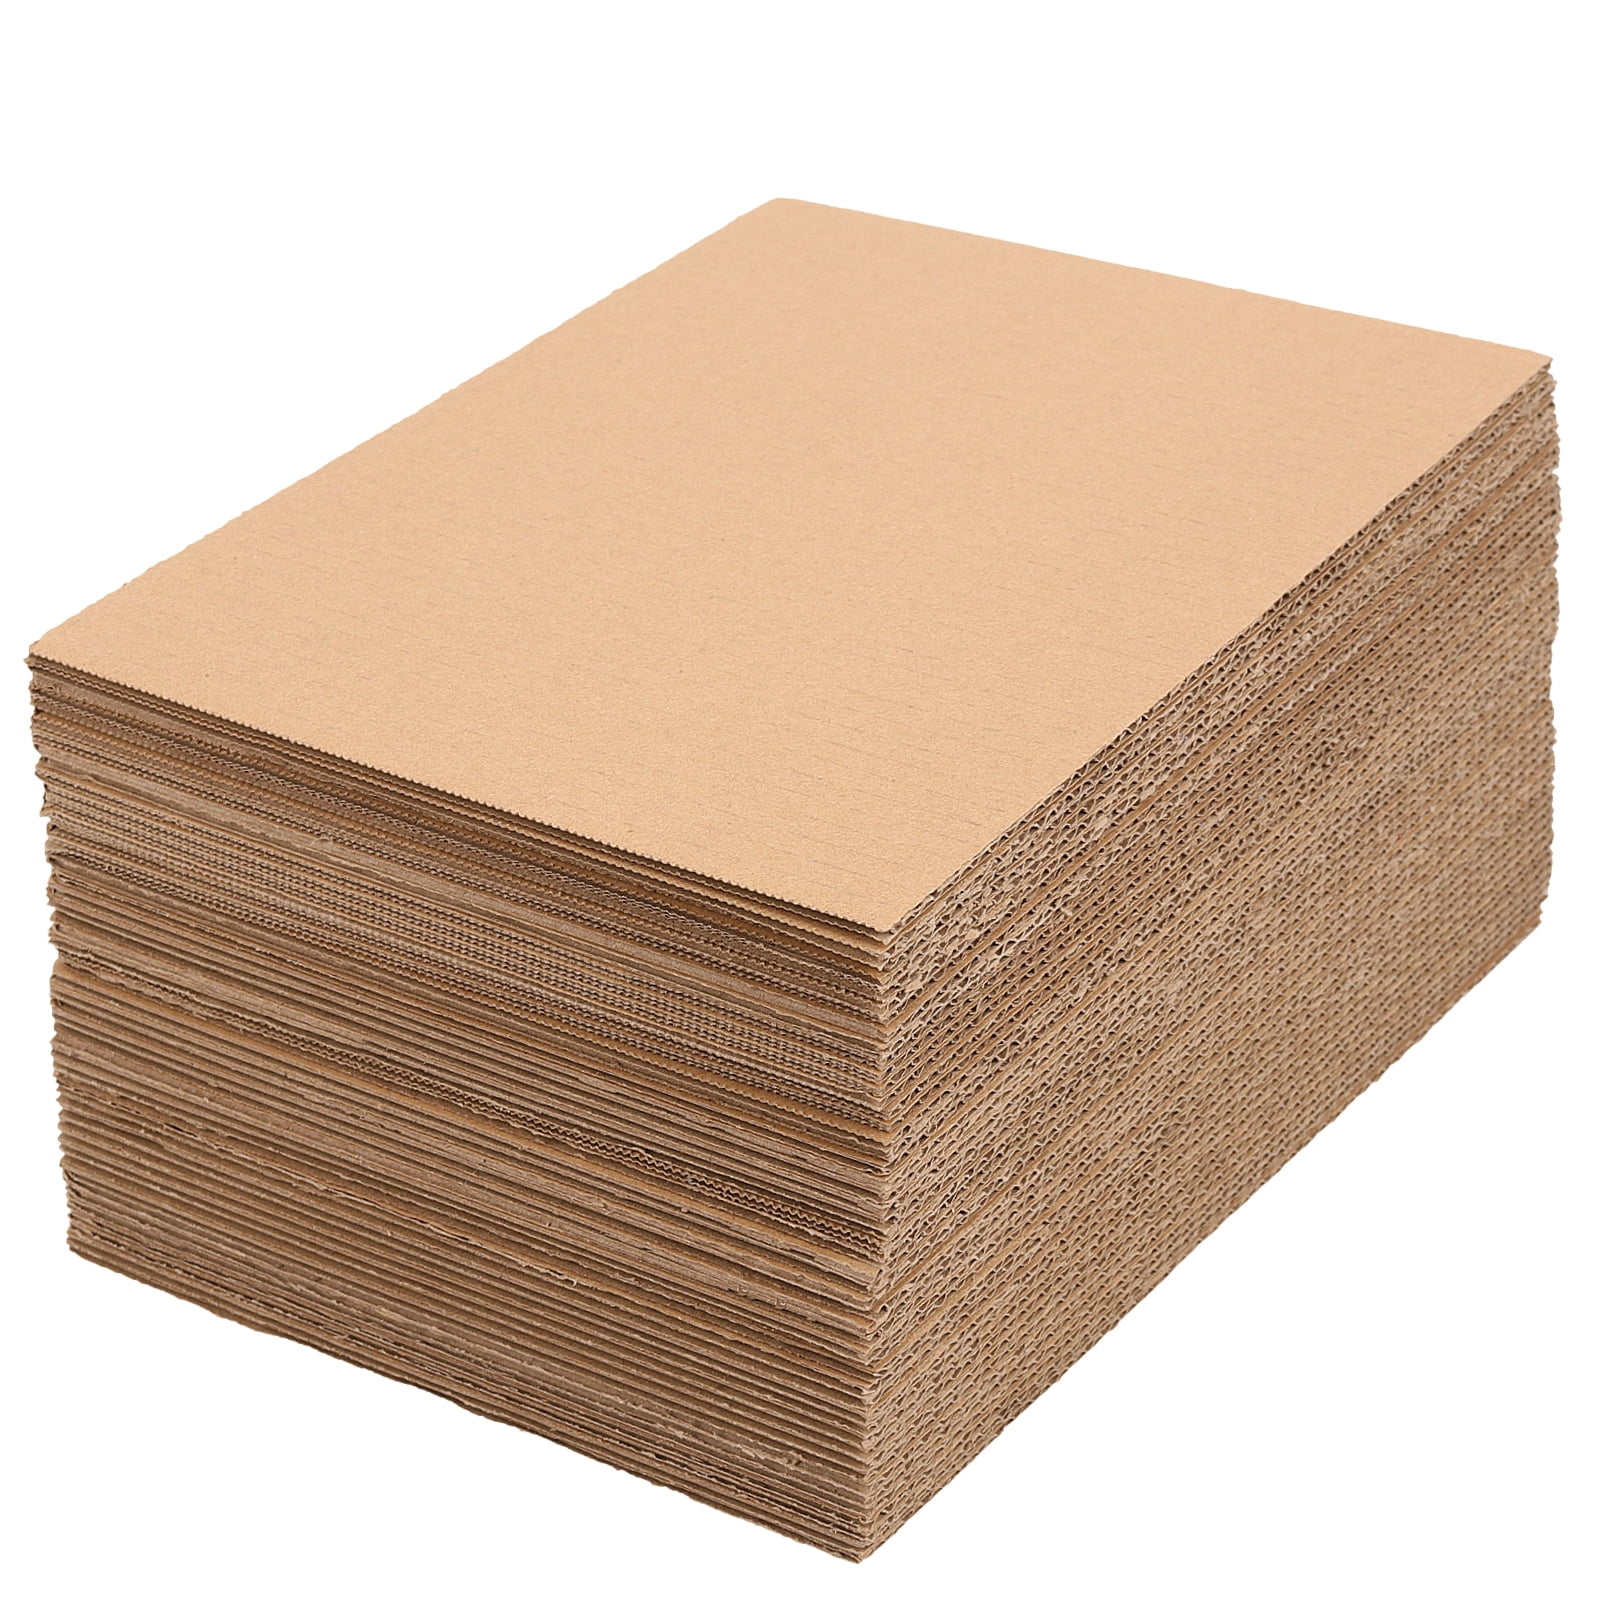 100 Pcs Corrugated Cardboard Sheets Set Corrugated Packaging Pads Paper  Flat Cardboard Filler Inserts Sheet Pads Rectangle for Delivering Packing